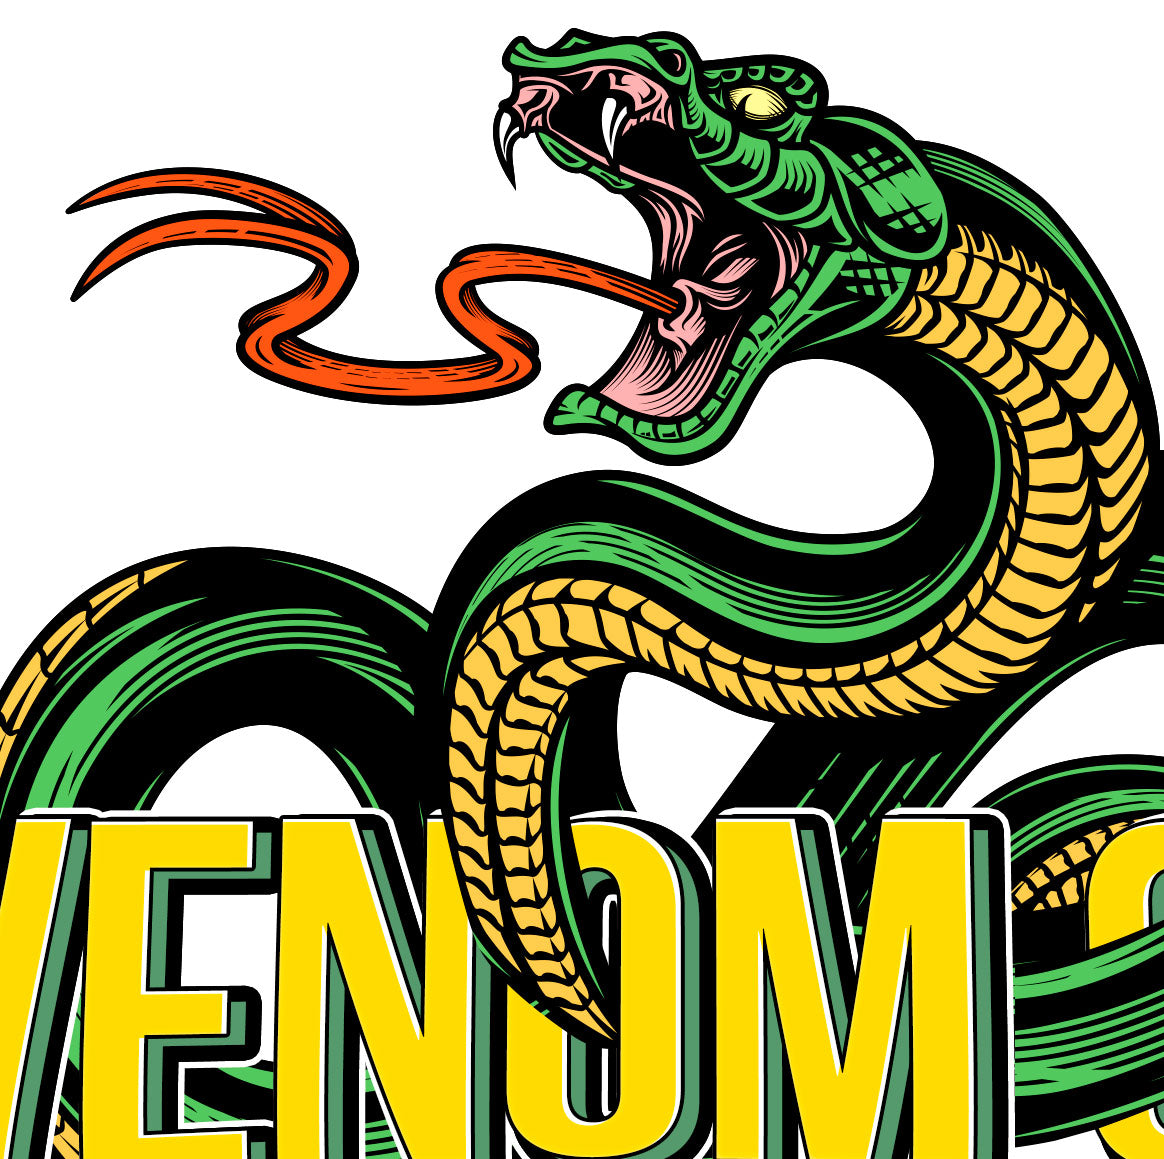 StonerDays Venom OG White Tee Graphic Close-Up, Green Serpent Design on White